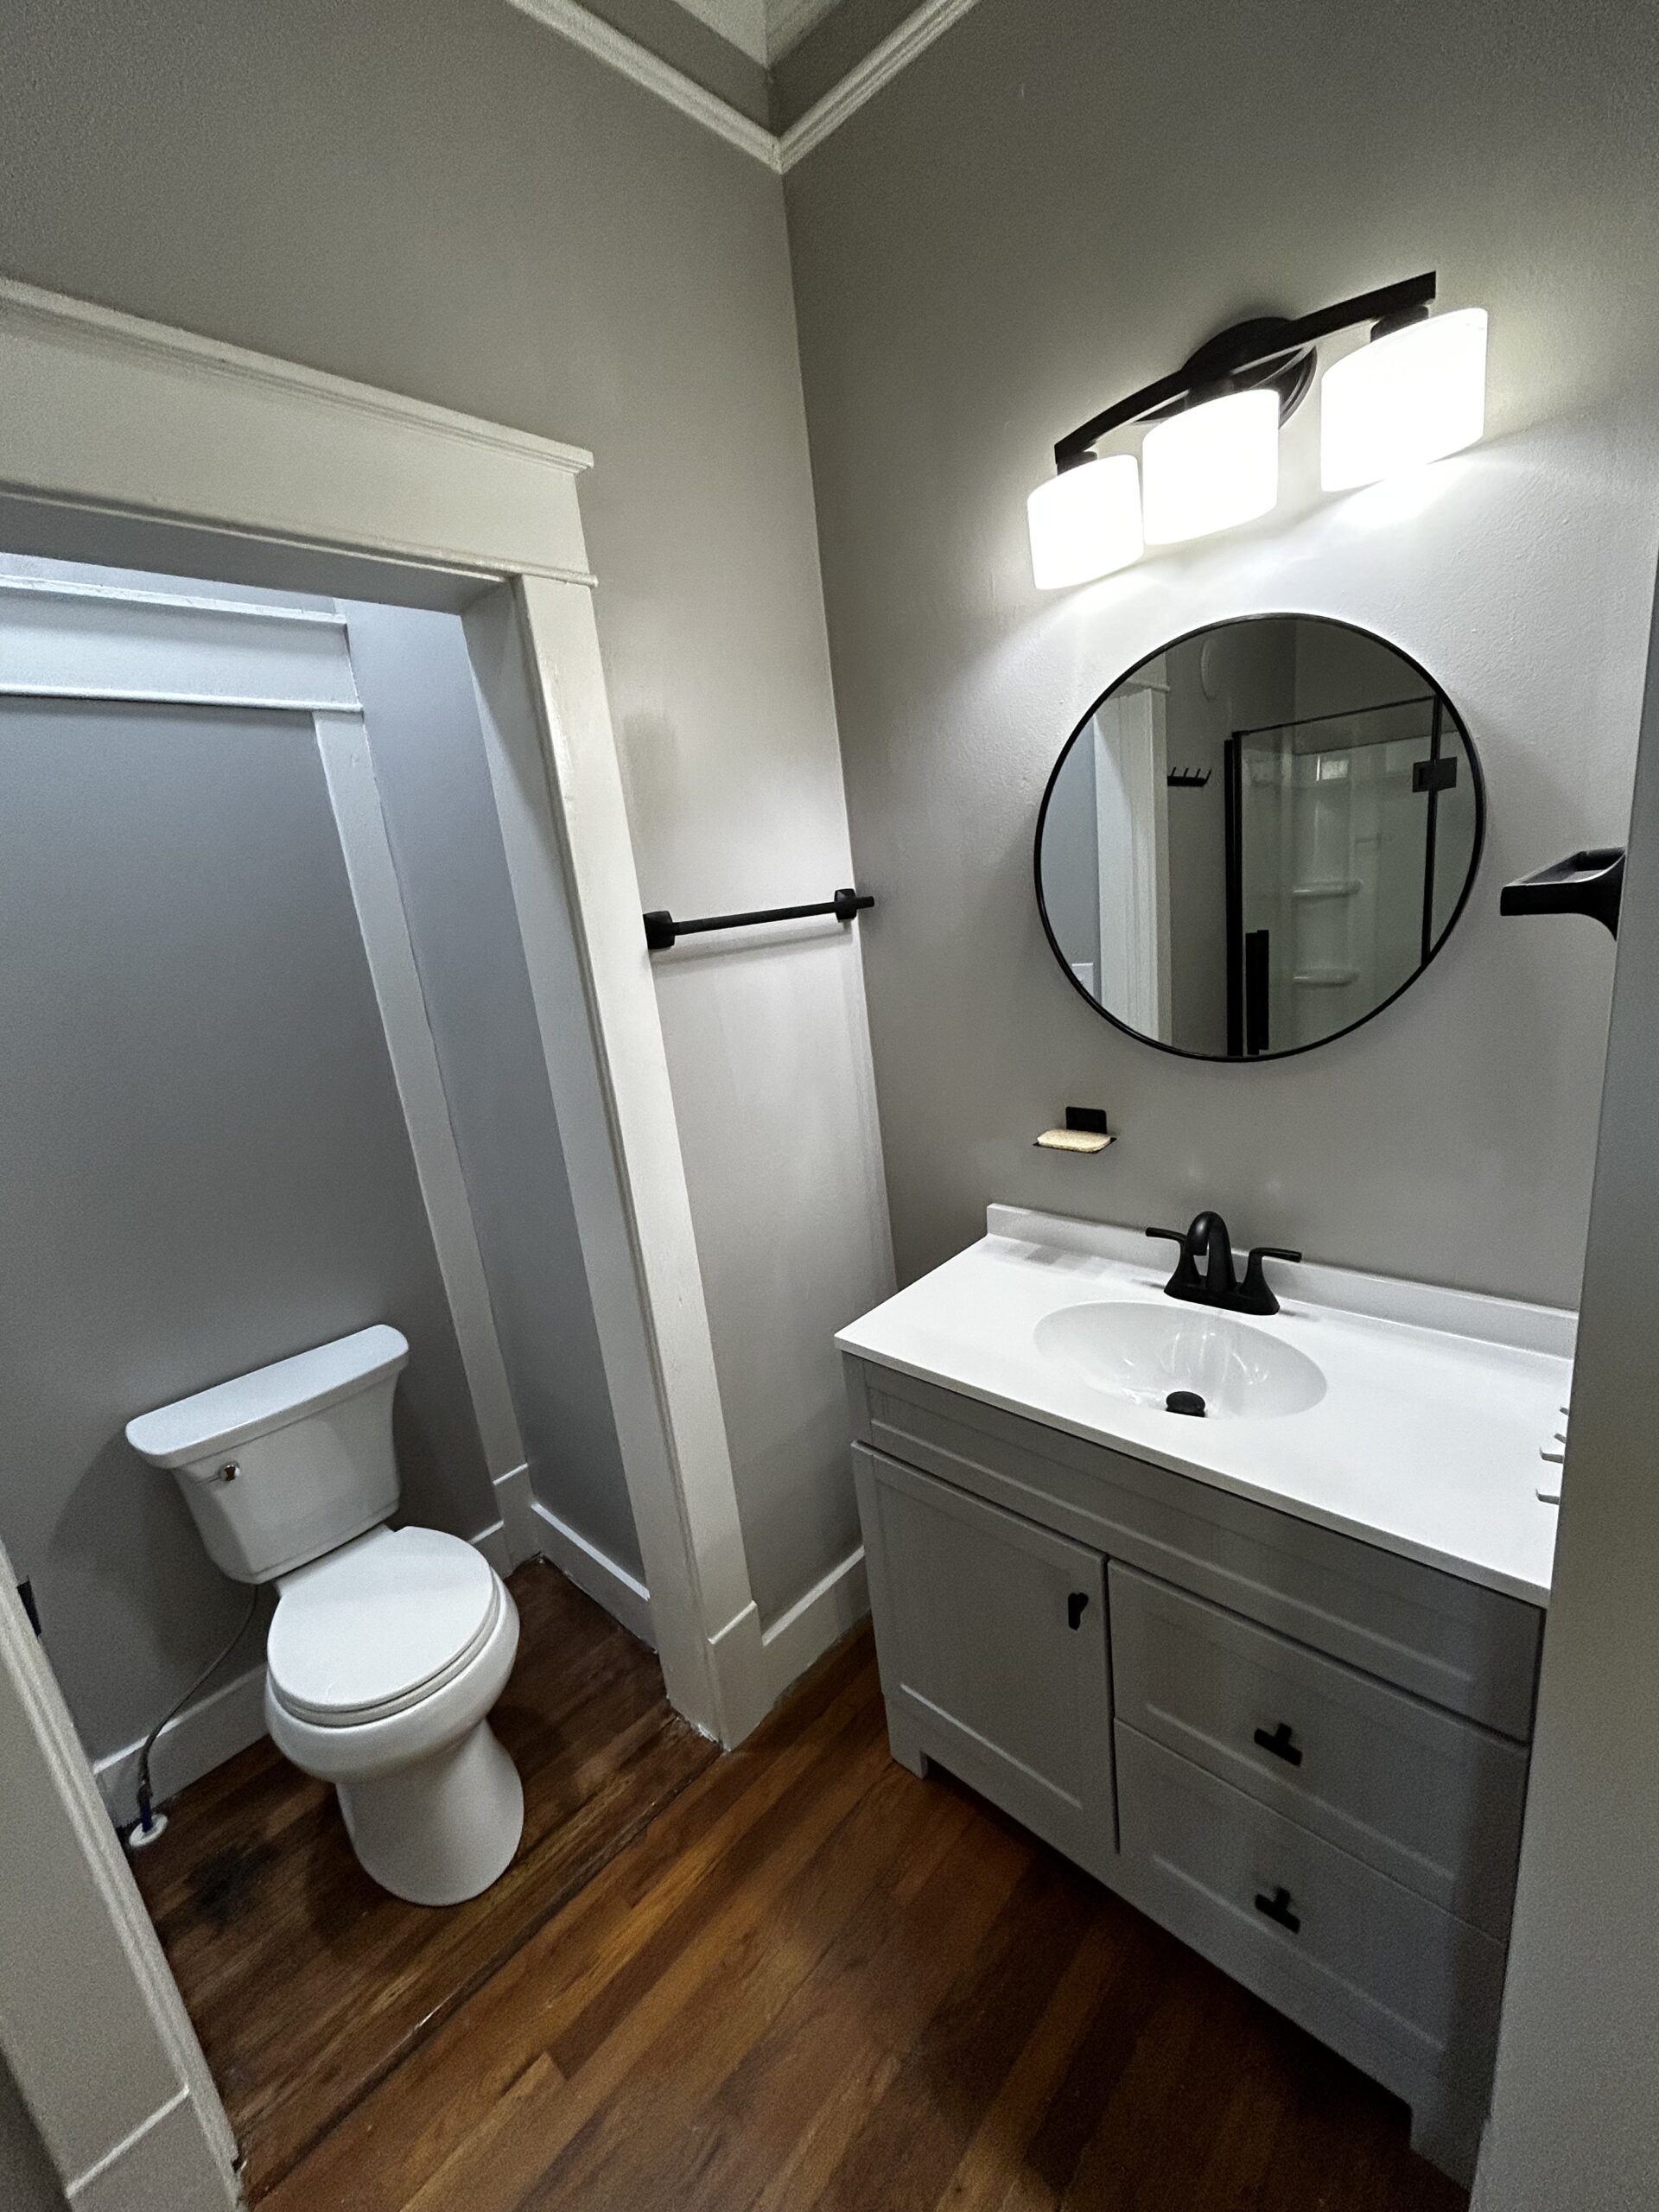 Bathroom Remodeling
Toilet and Vanity installation